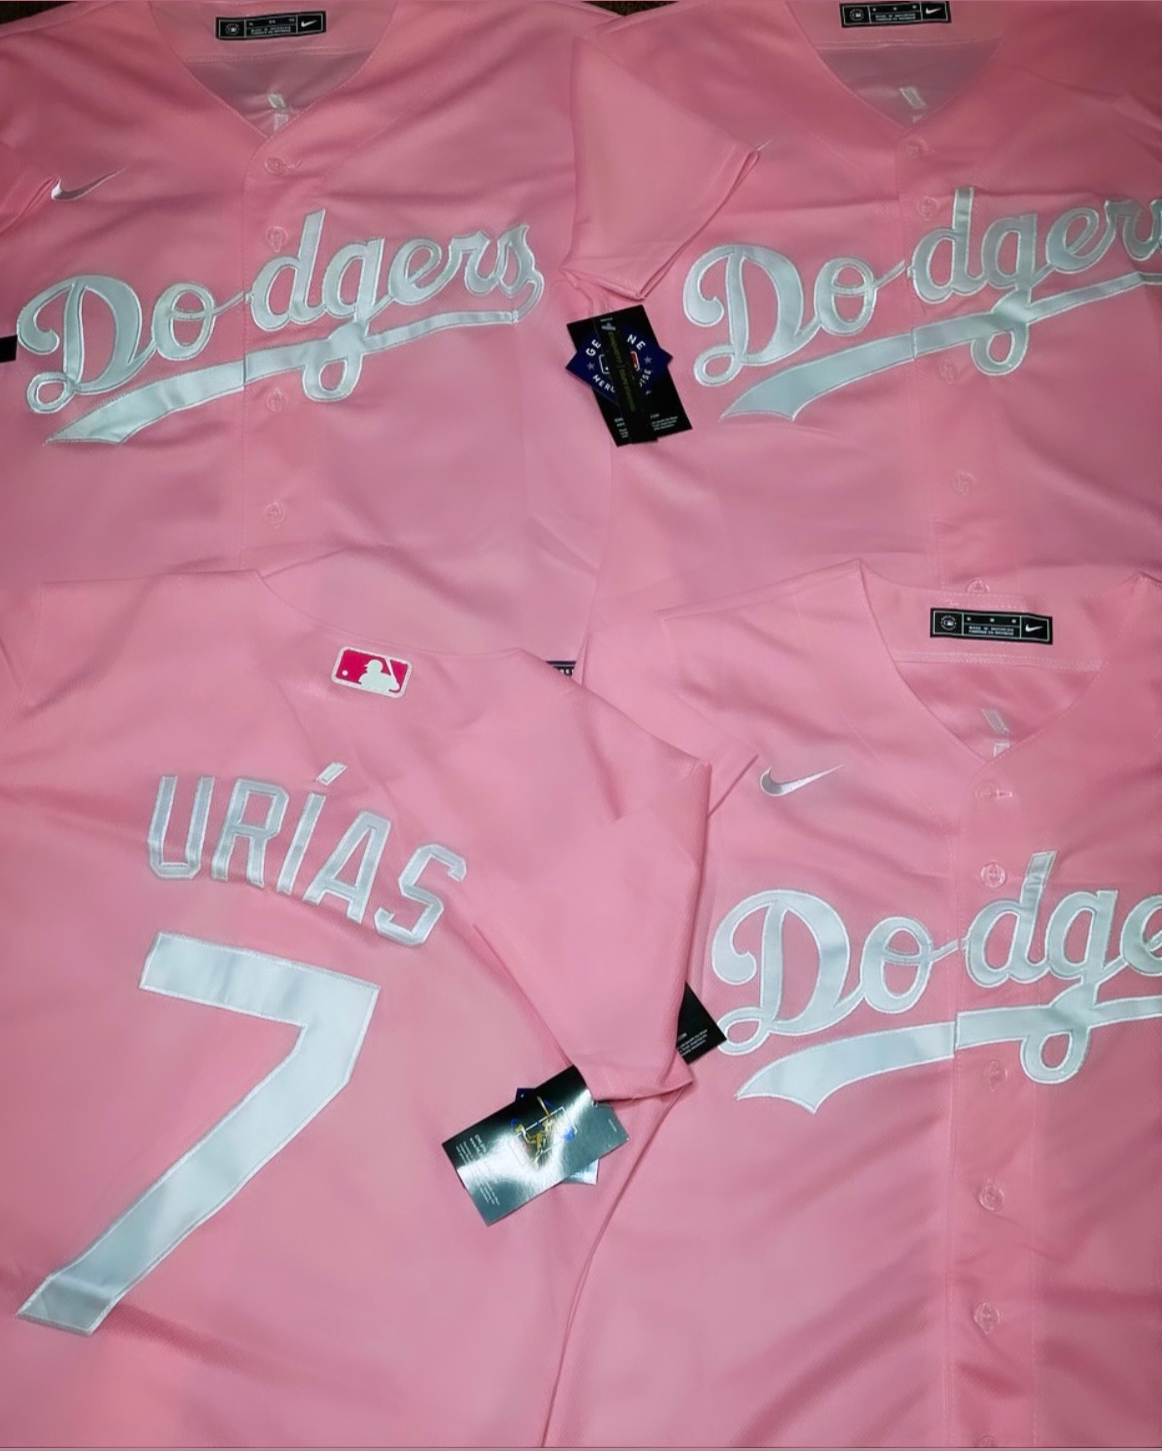 10451-LA Dodgers Baby Pink Jersey